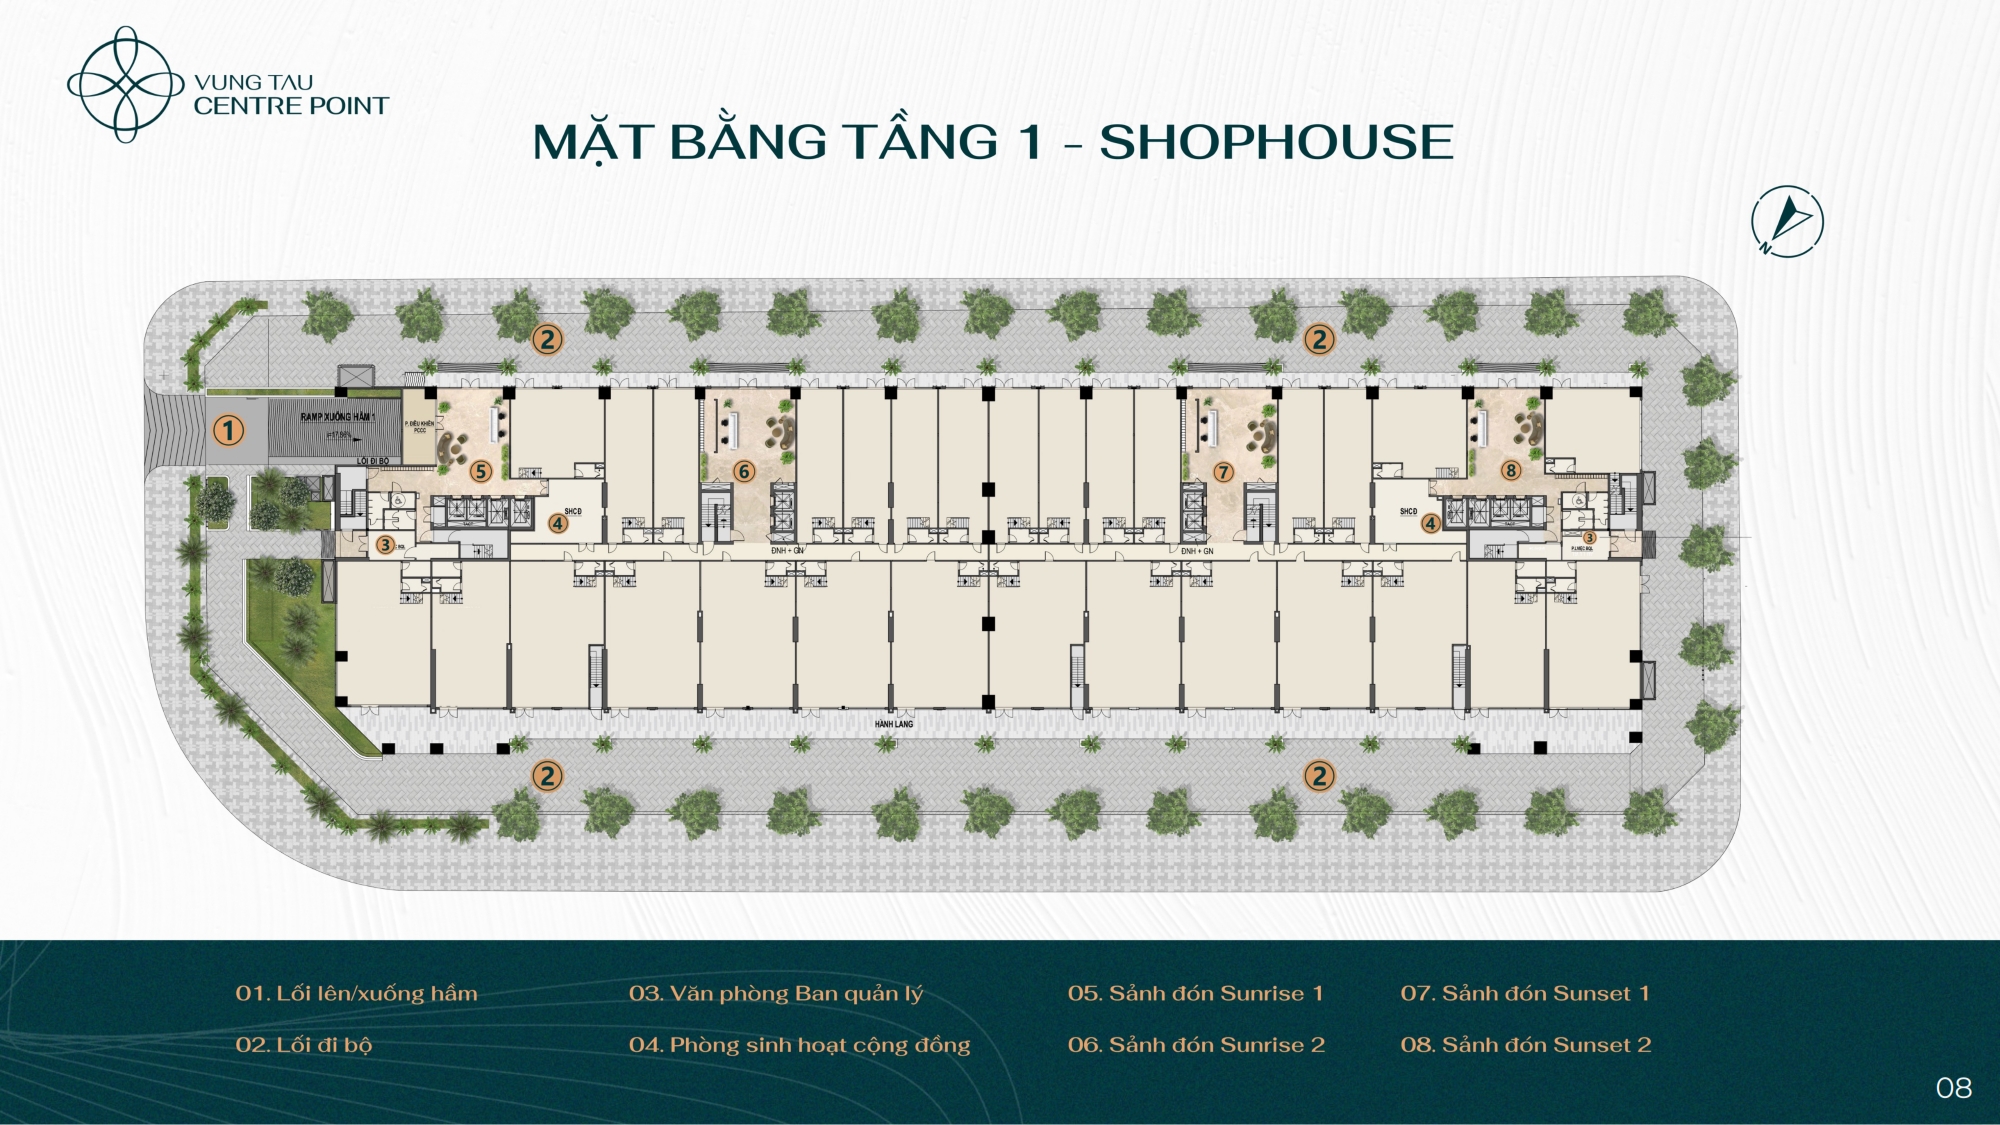 Mat bang Tang 1 Shophouse Vung Tau Centre Point - Vũng Tàu Centre Point